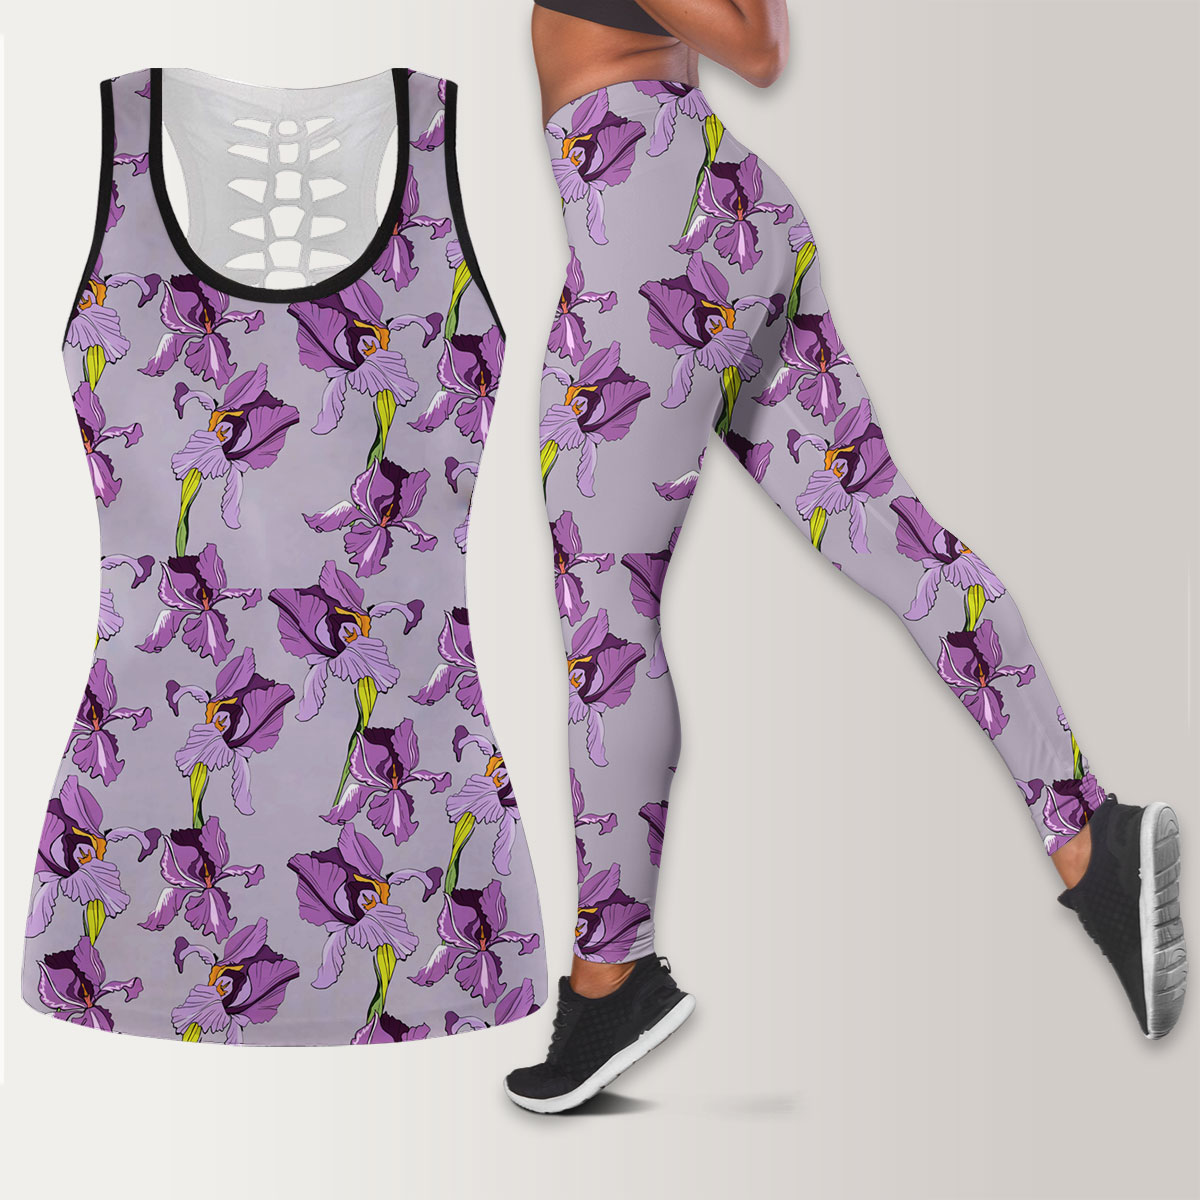 Seamless Pattern With Purple Iris Flowers Legging Tank Top set